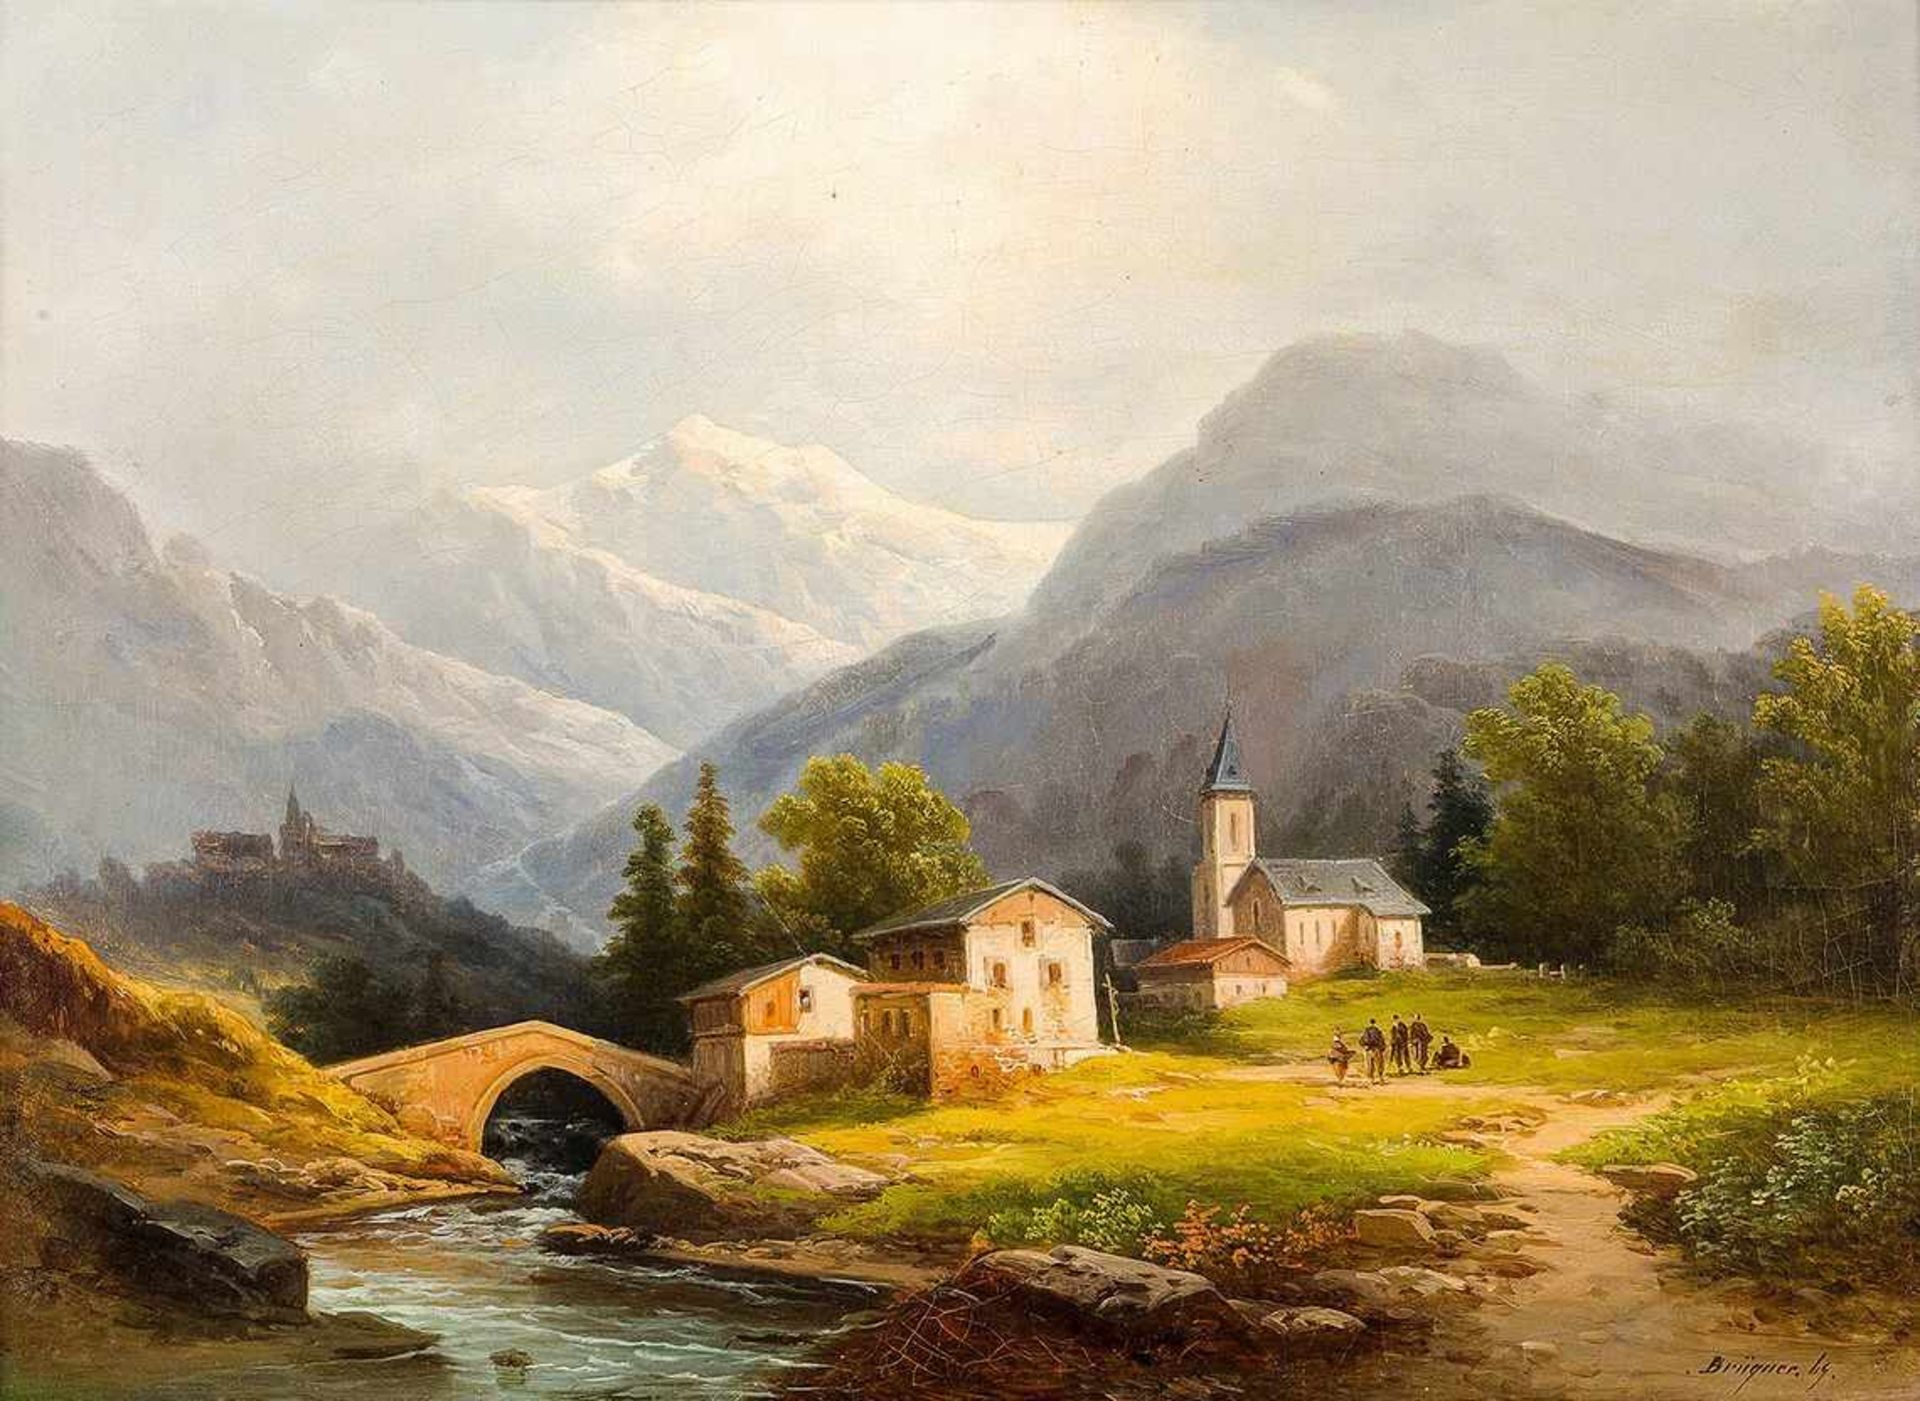 Brügner, Cölestin1824 Berlin - 1887 ebd. Öl/Lw. Das Dorf Tavascan. Sommerliche, alpine Landschaft